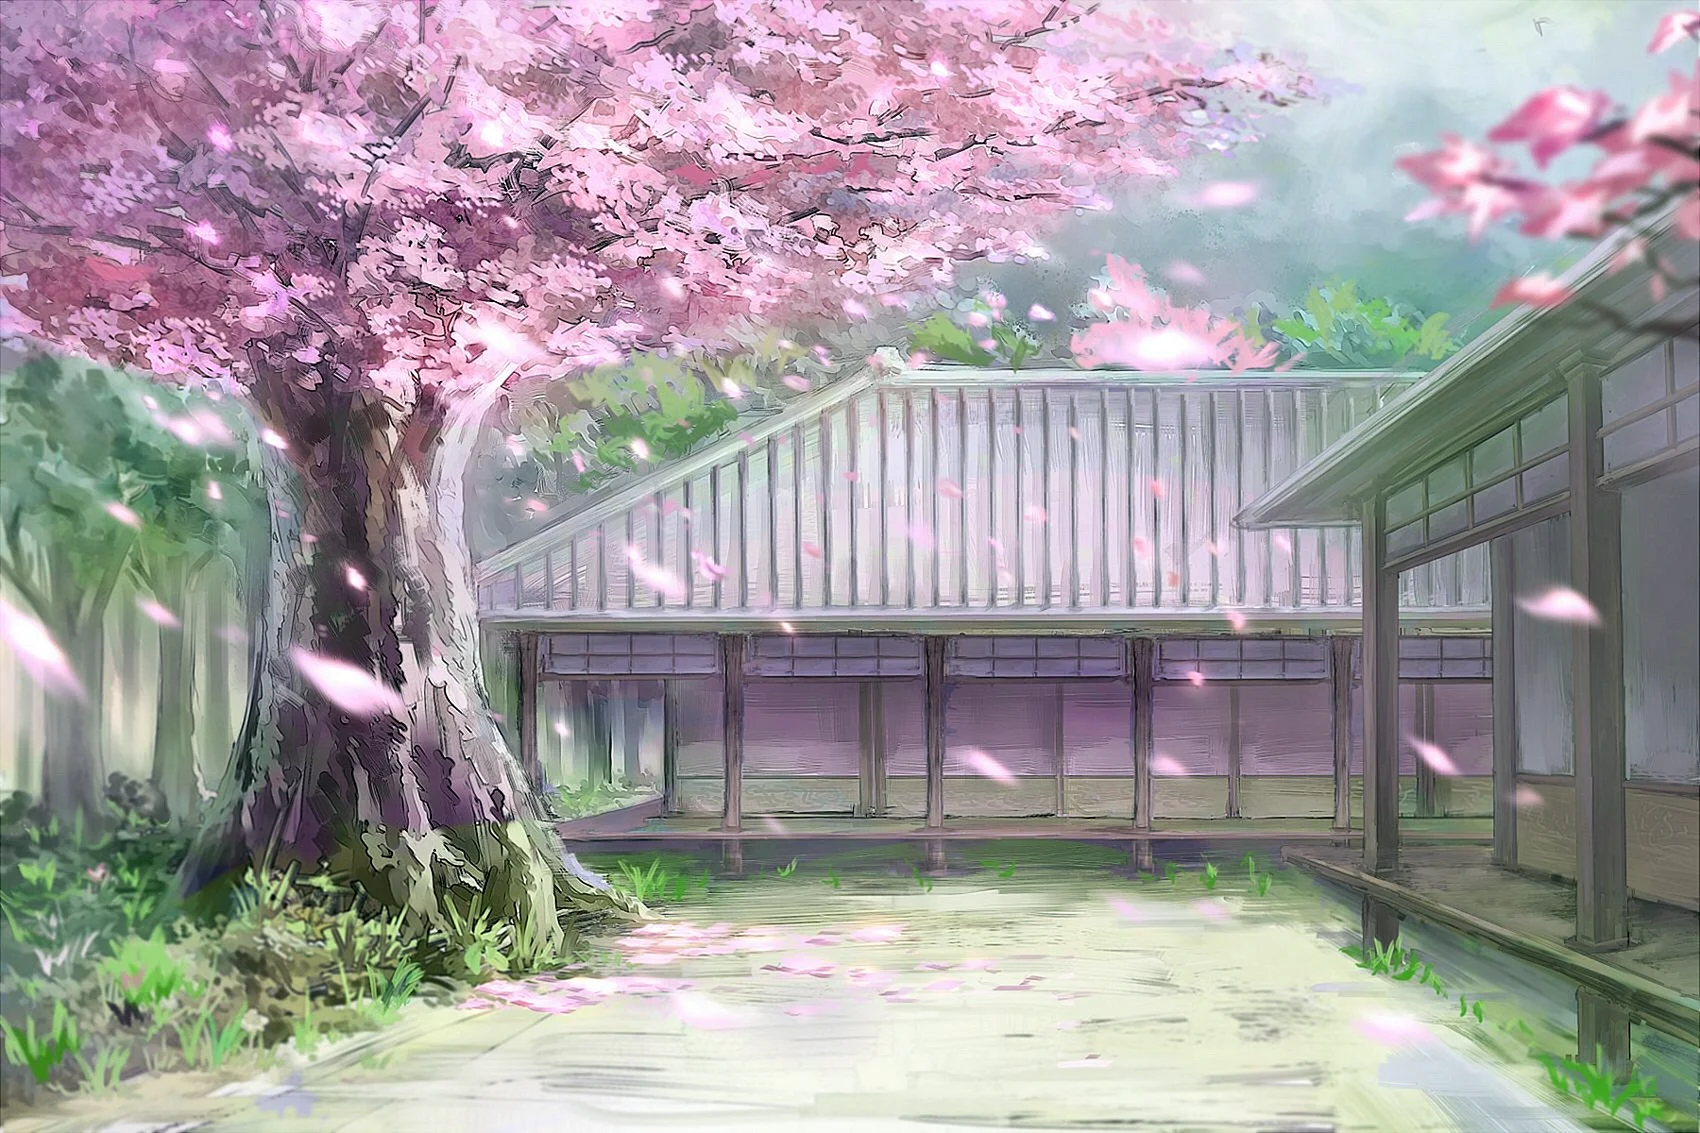 Sakura Anime Wallpaper